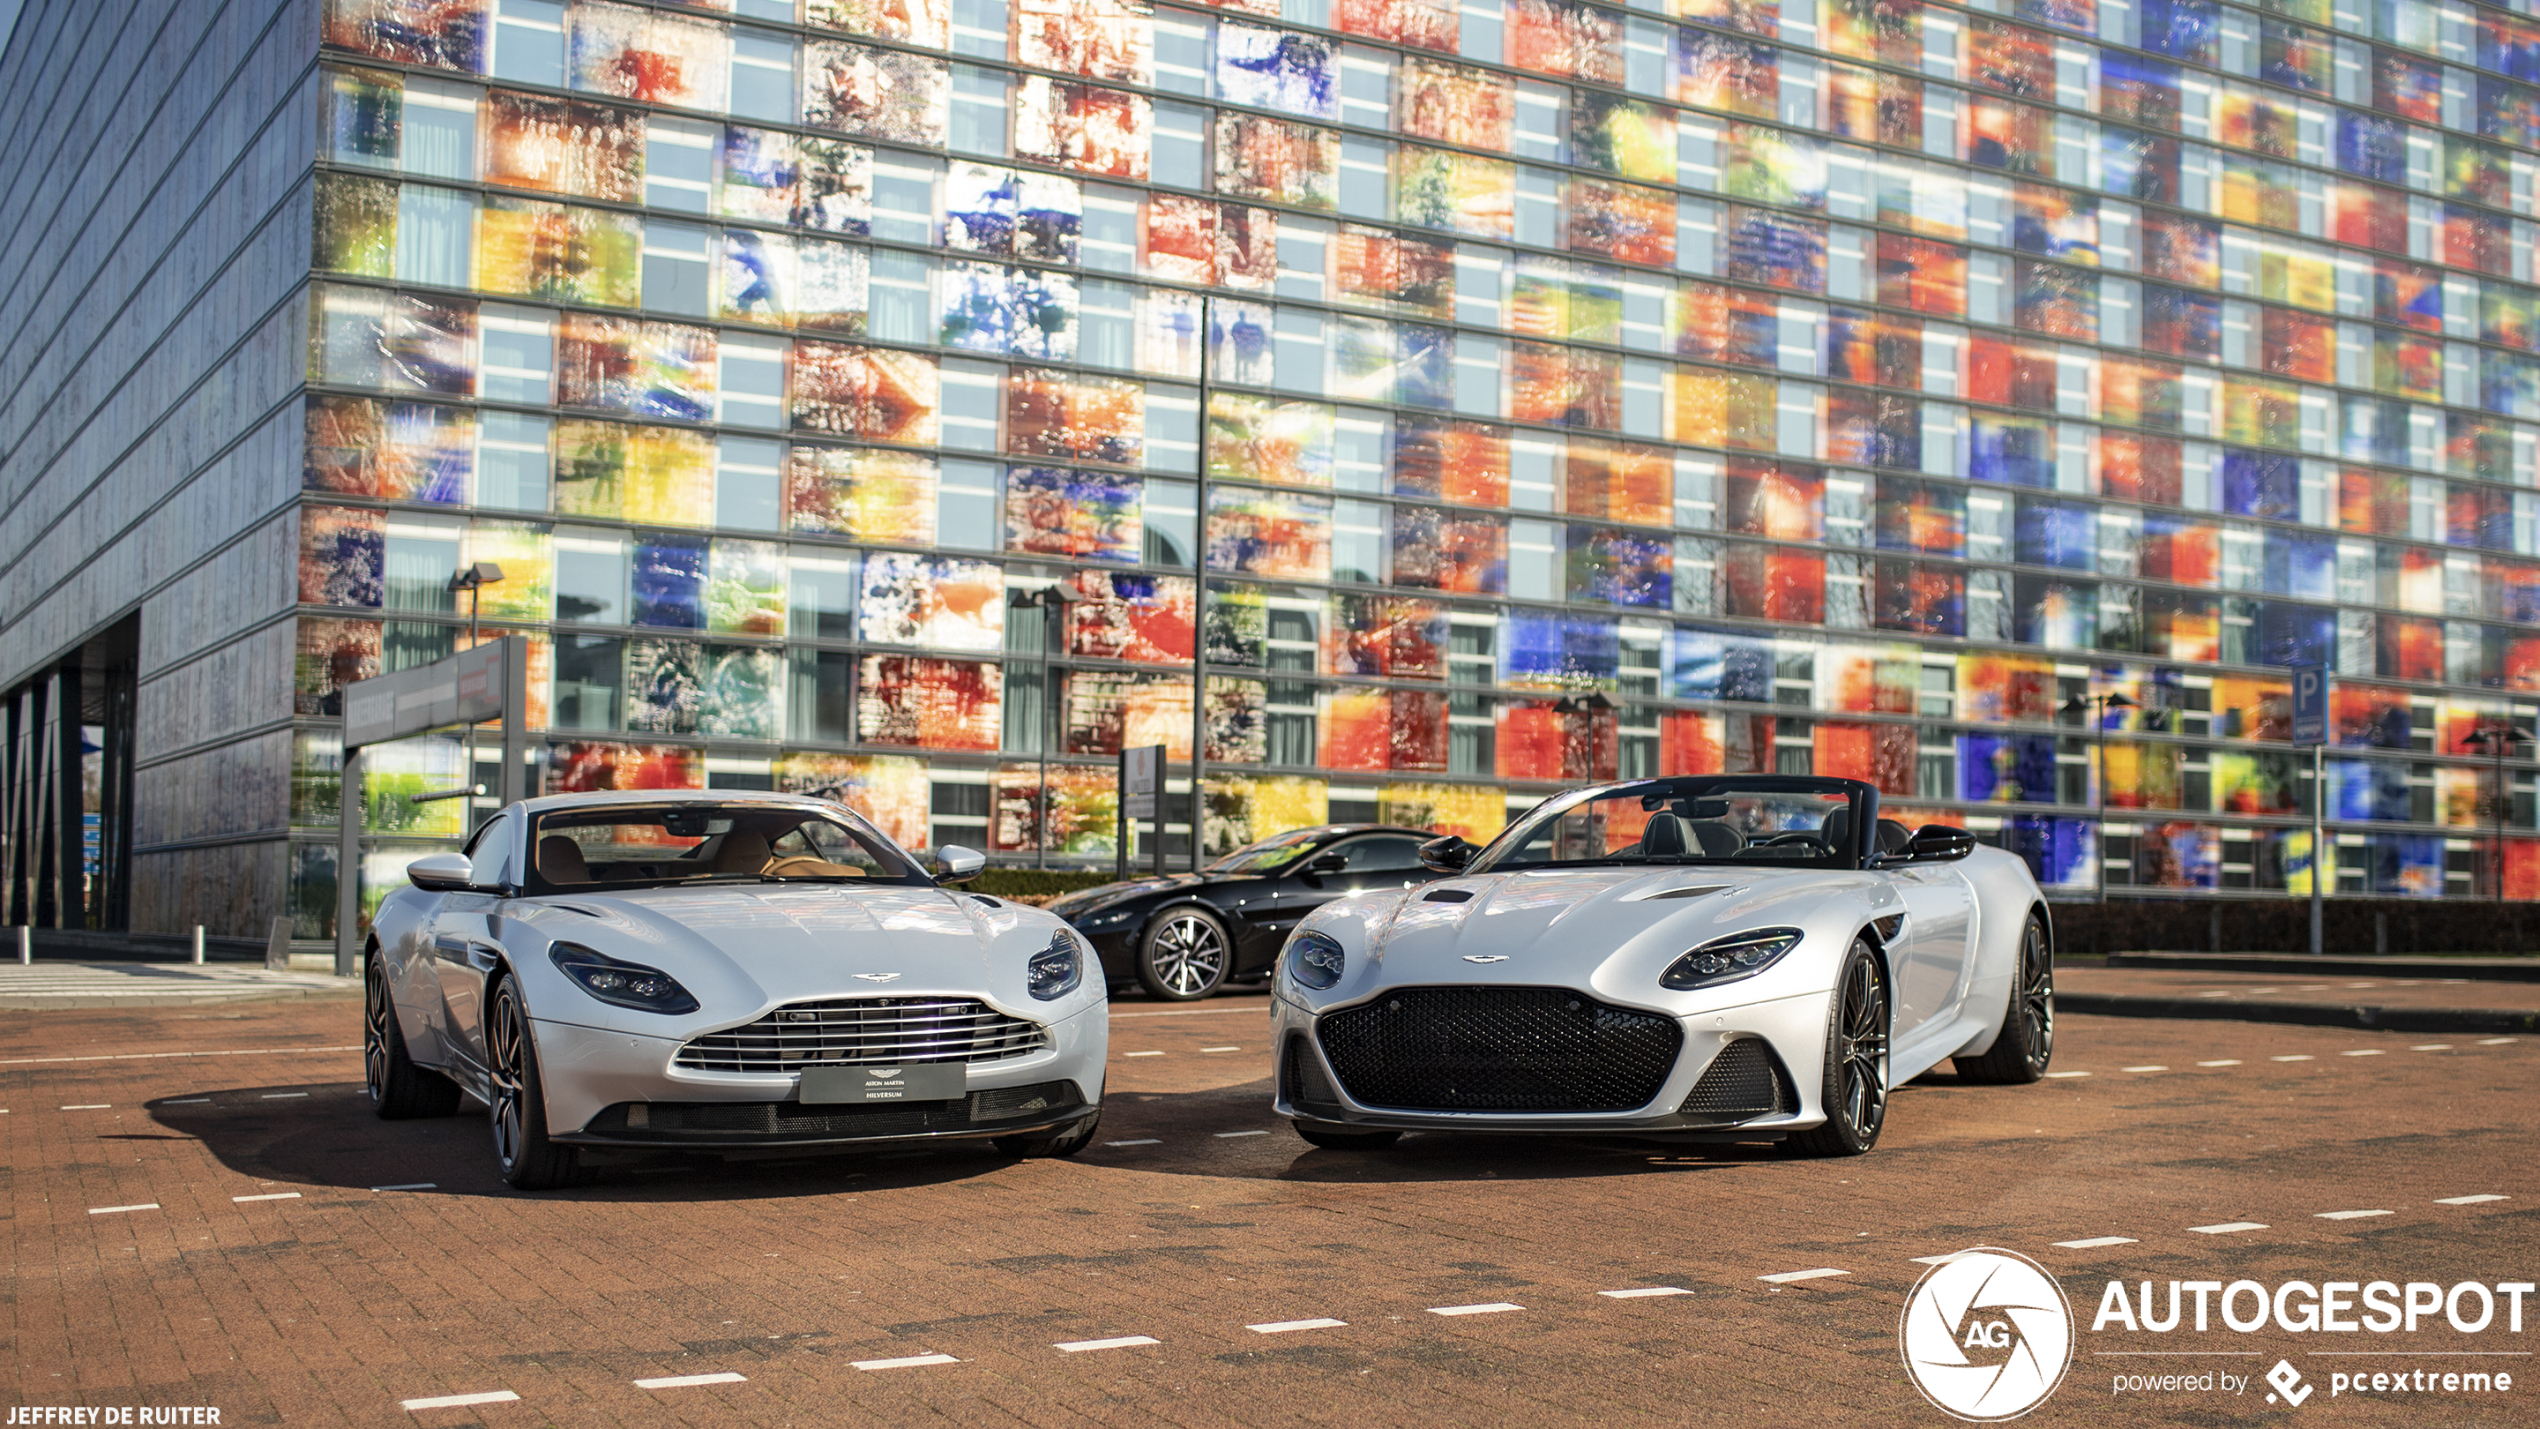 Aston Martin DBS Superleggera Volante pakt glansrijk de hoofdrol